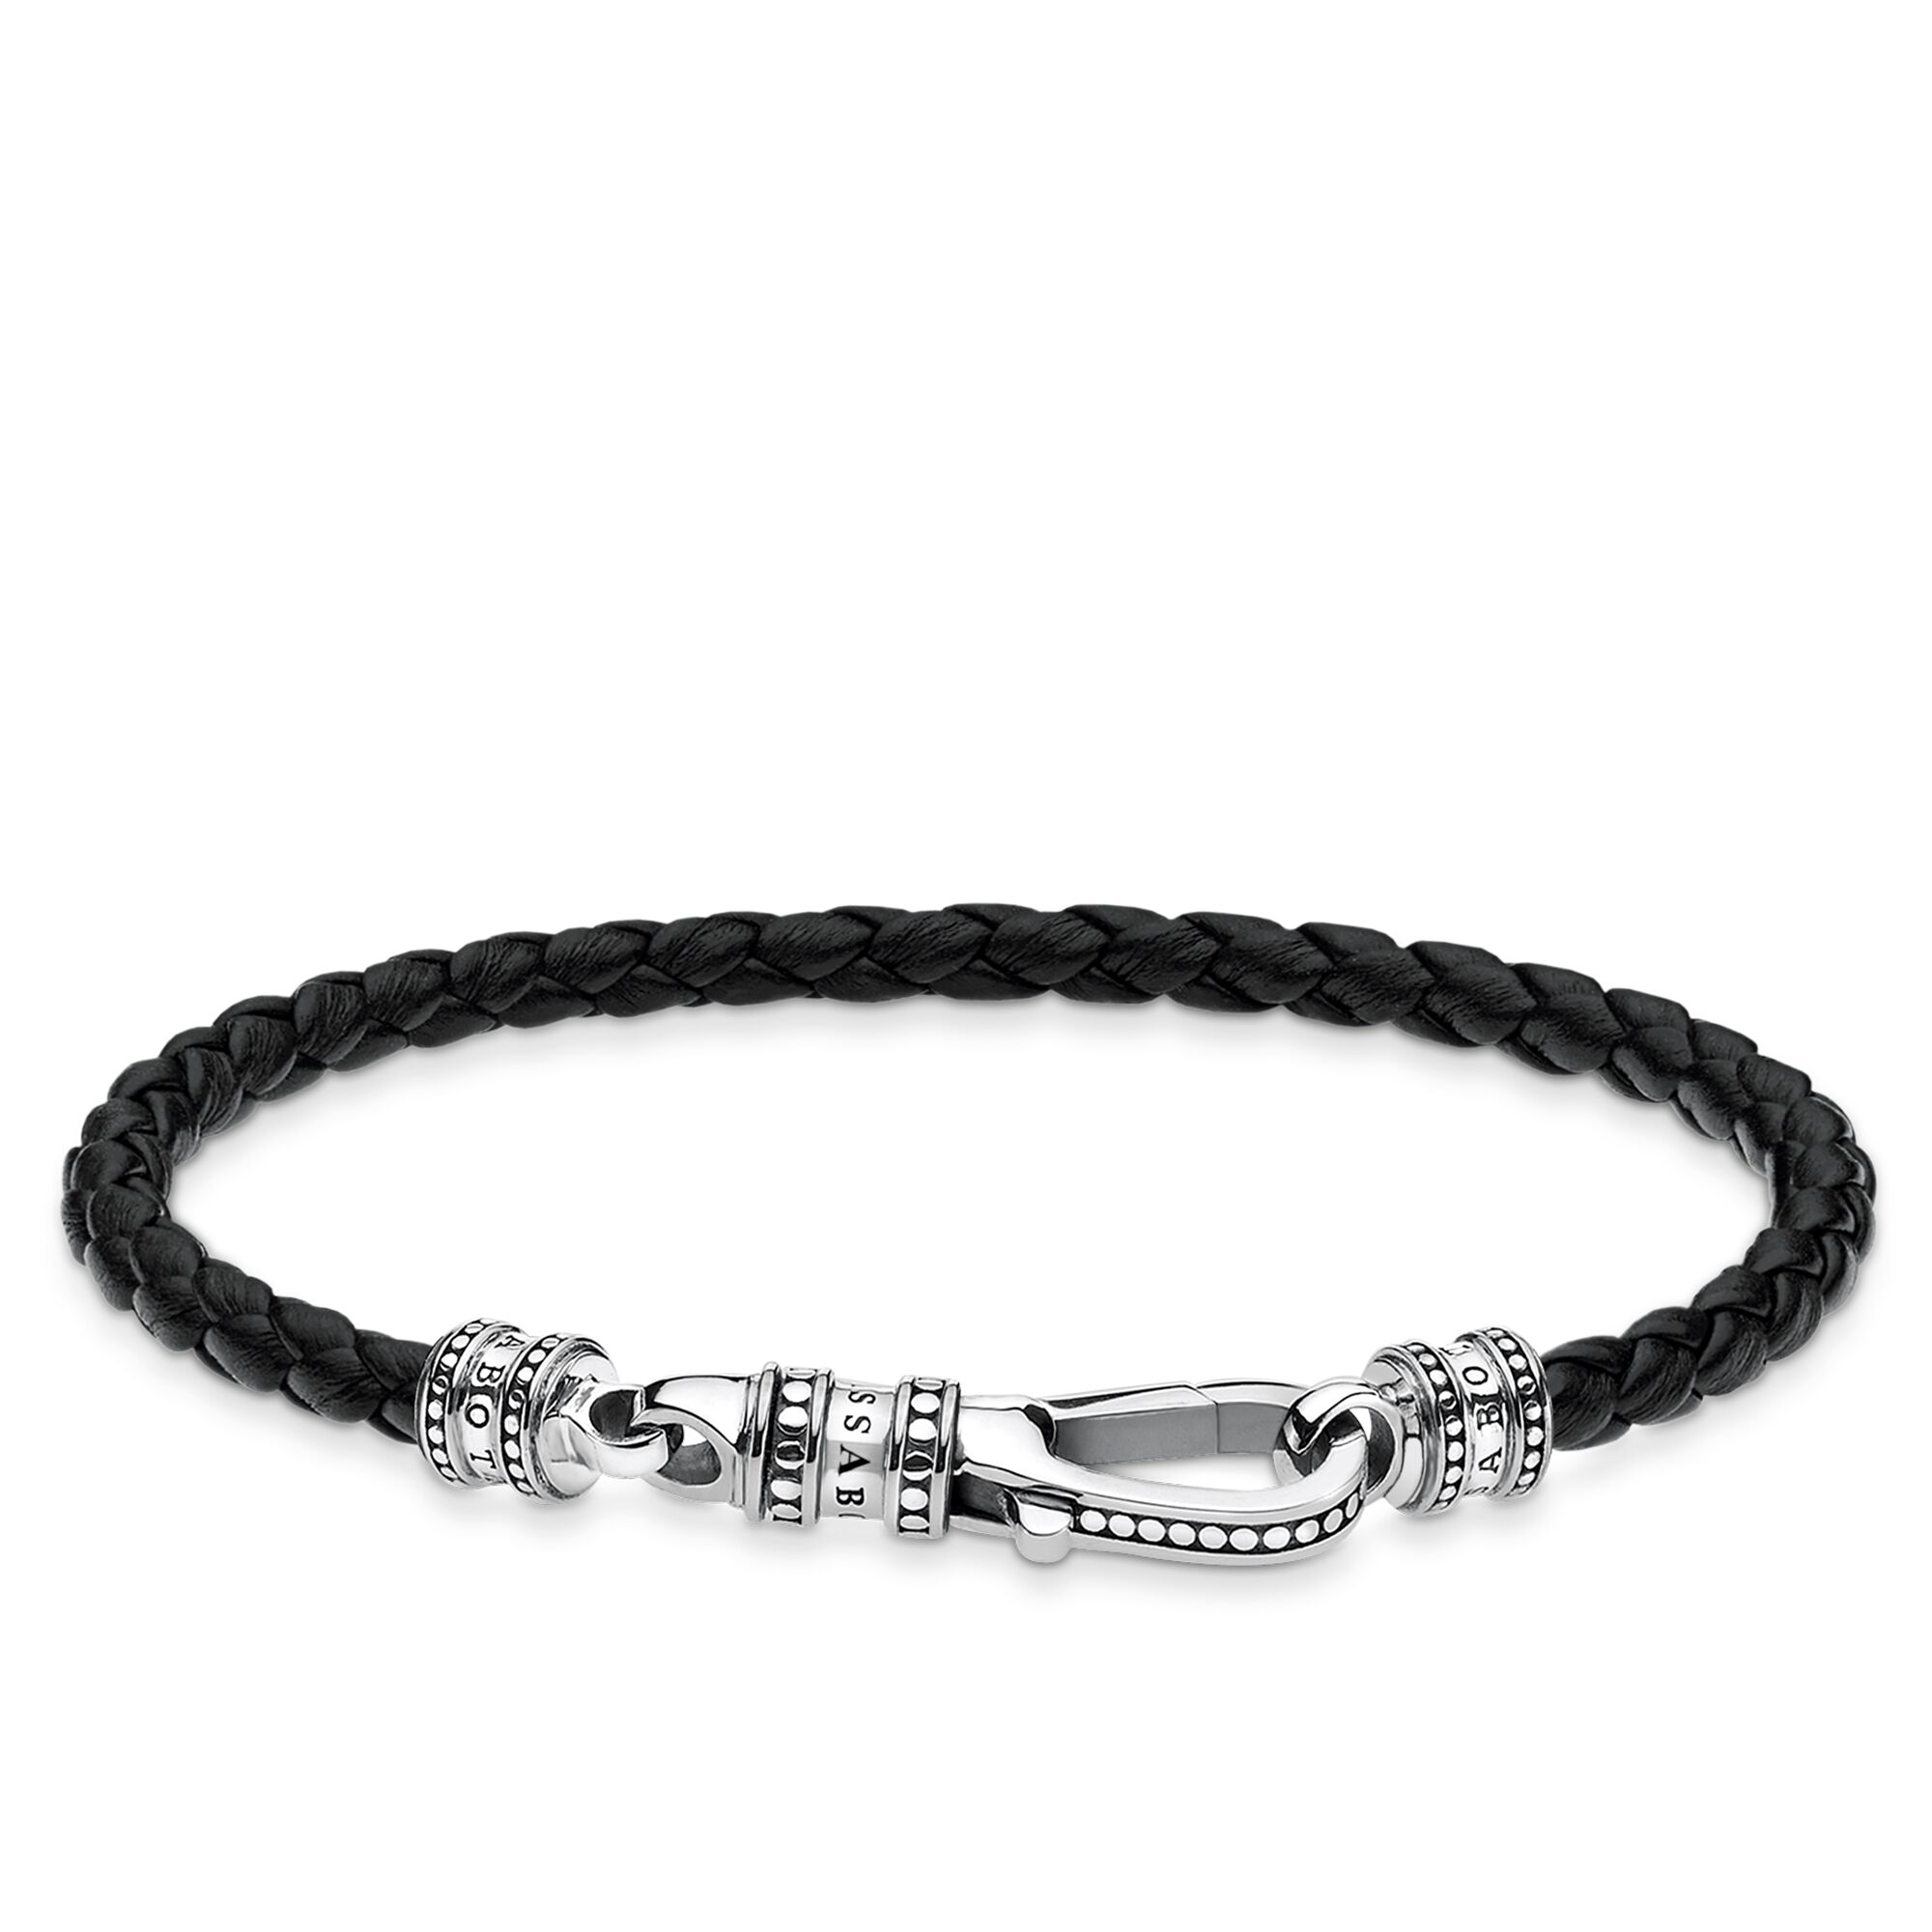 Wholesale OEM/ODM Jewelry Custom Hand-woven, black leather bracelet design in Sterling silver manufacturer